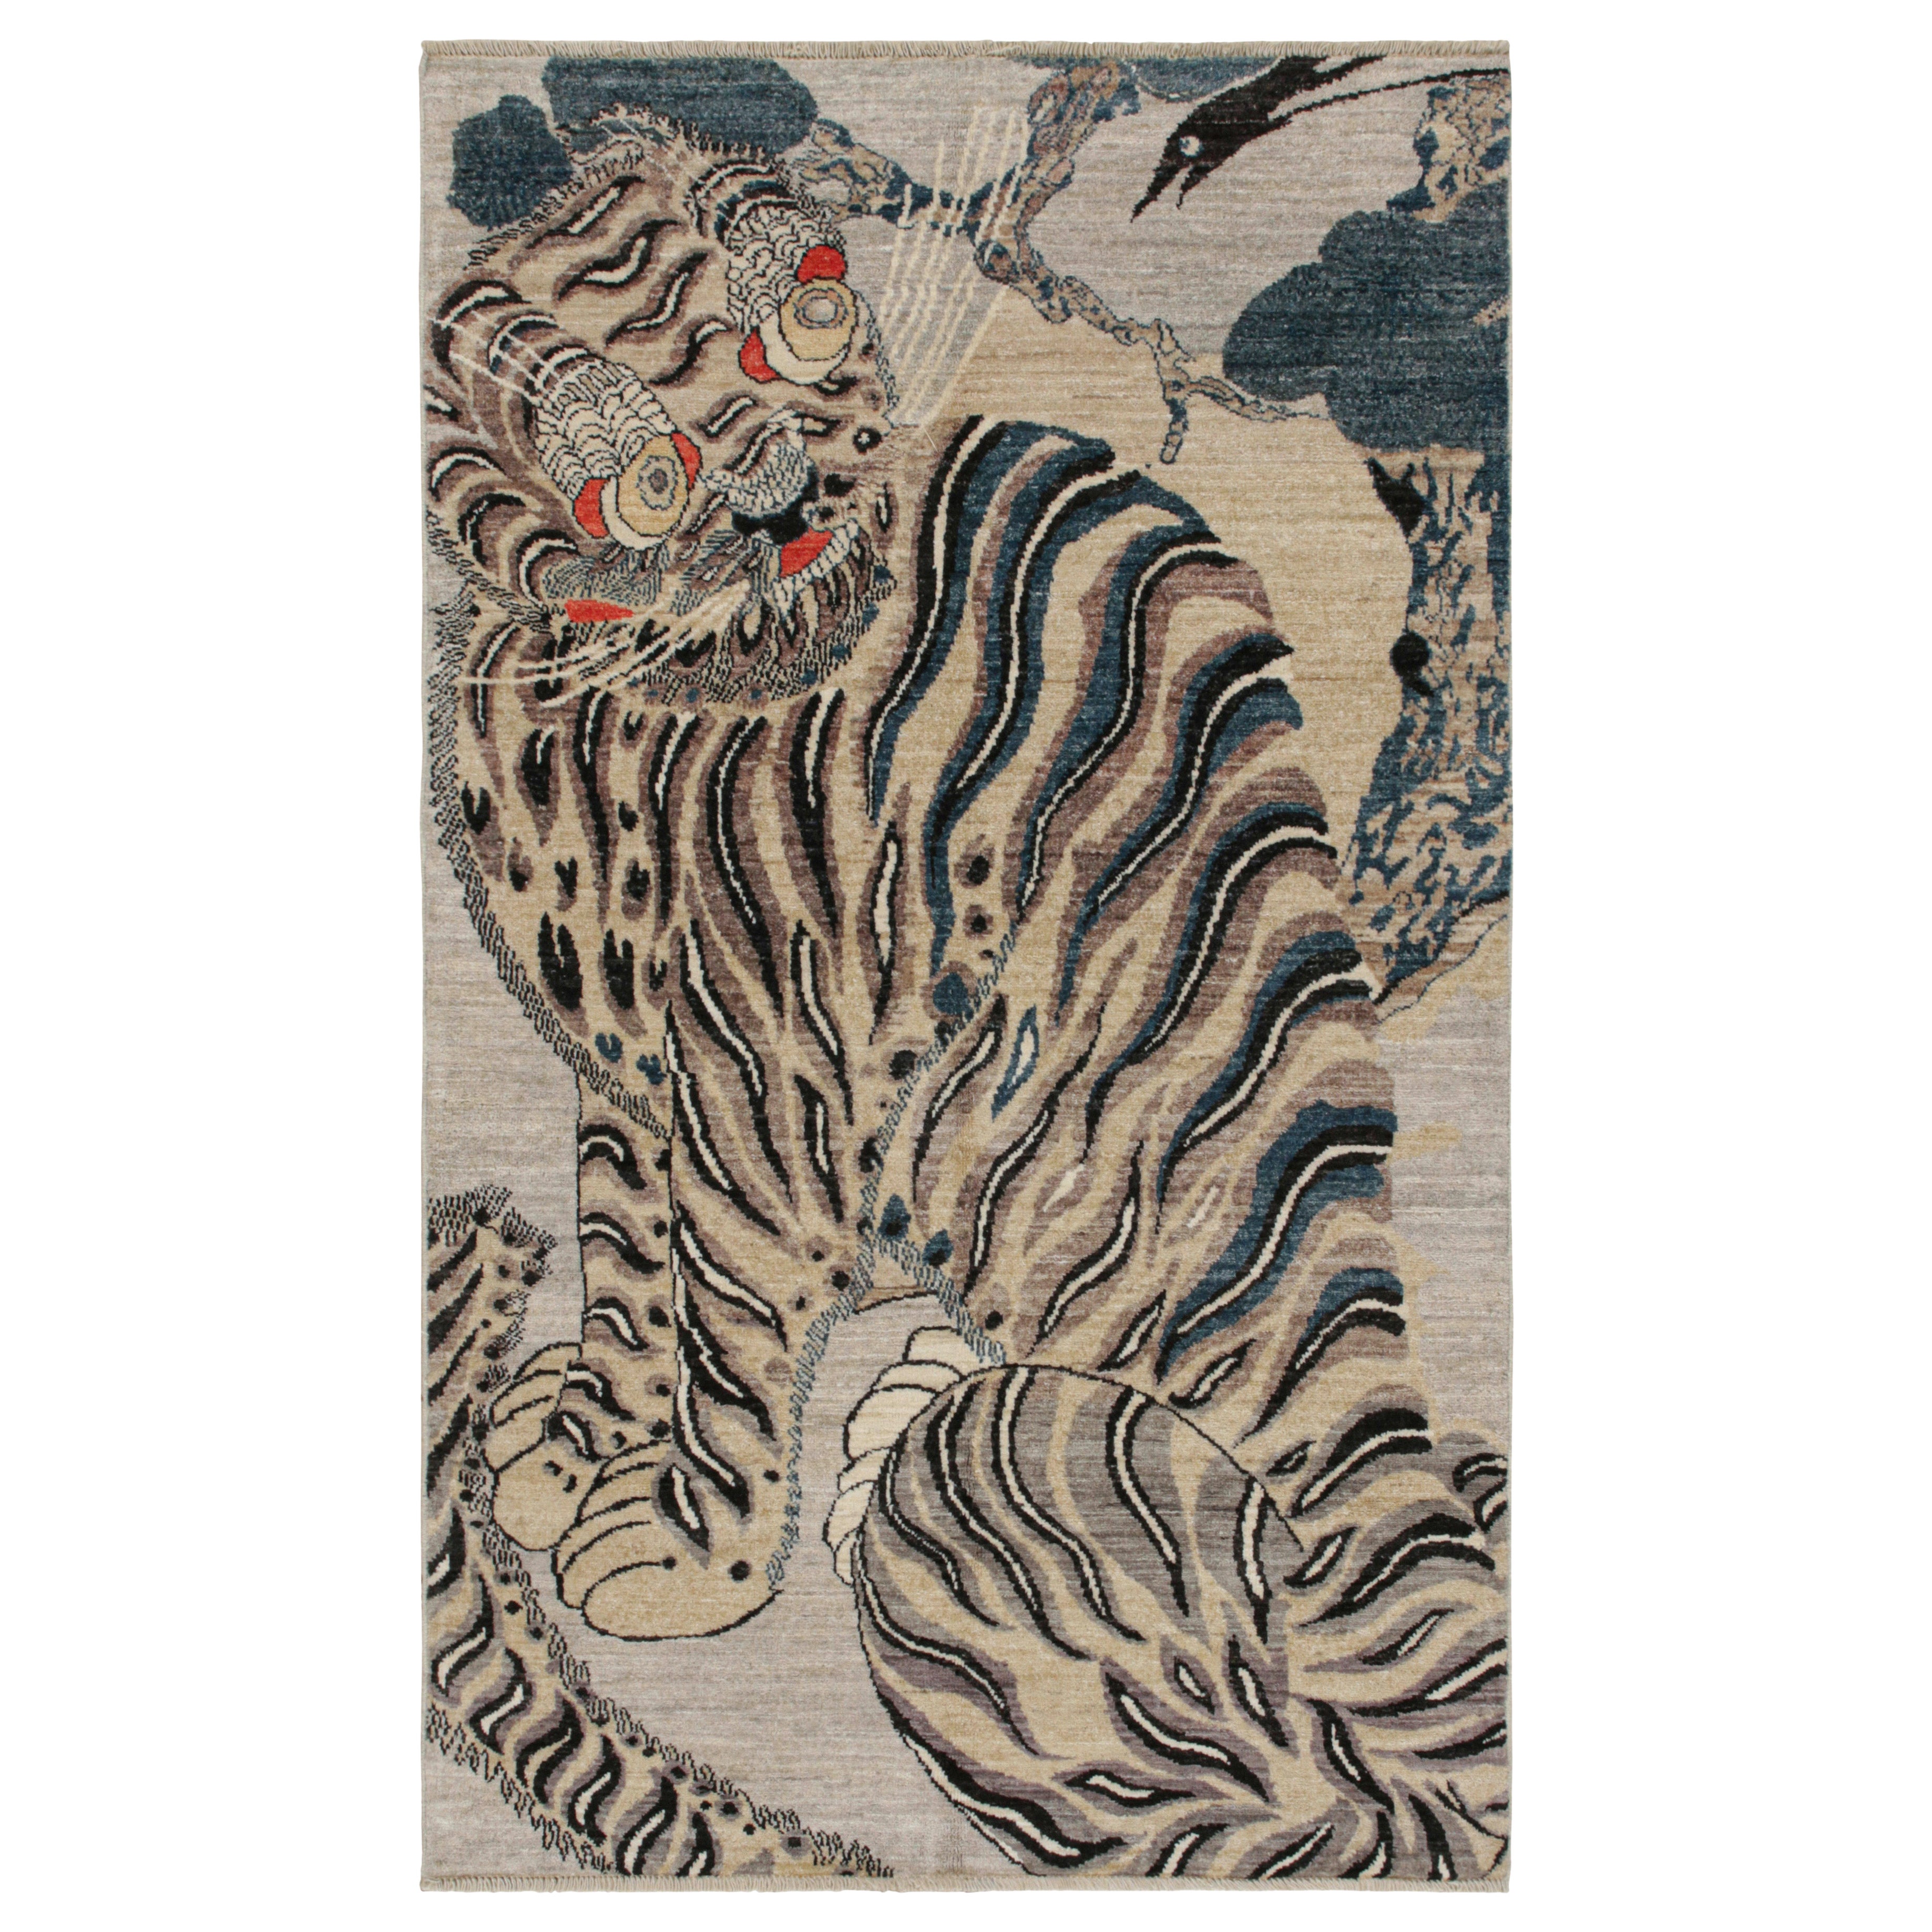 Rug & Kilim's Custom Tiger-Skin Rug with Beige/Brown, Blue, Black Pictorial (tapis en peau de tigre sur mesure avec pictogramme beige/brun, bleu et noir)